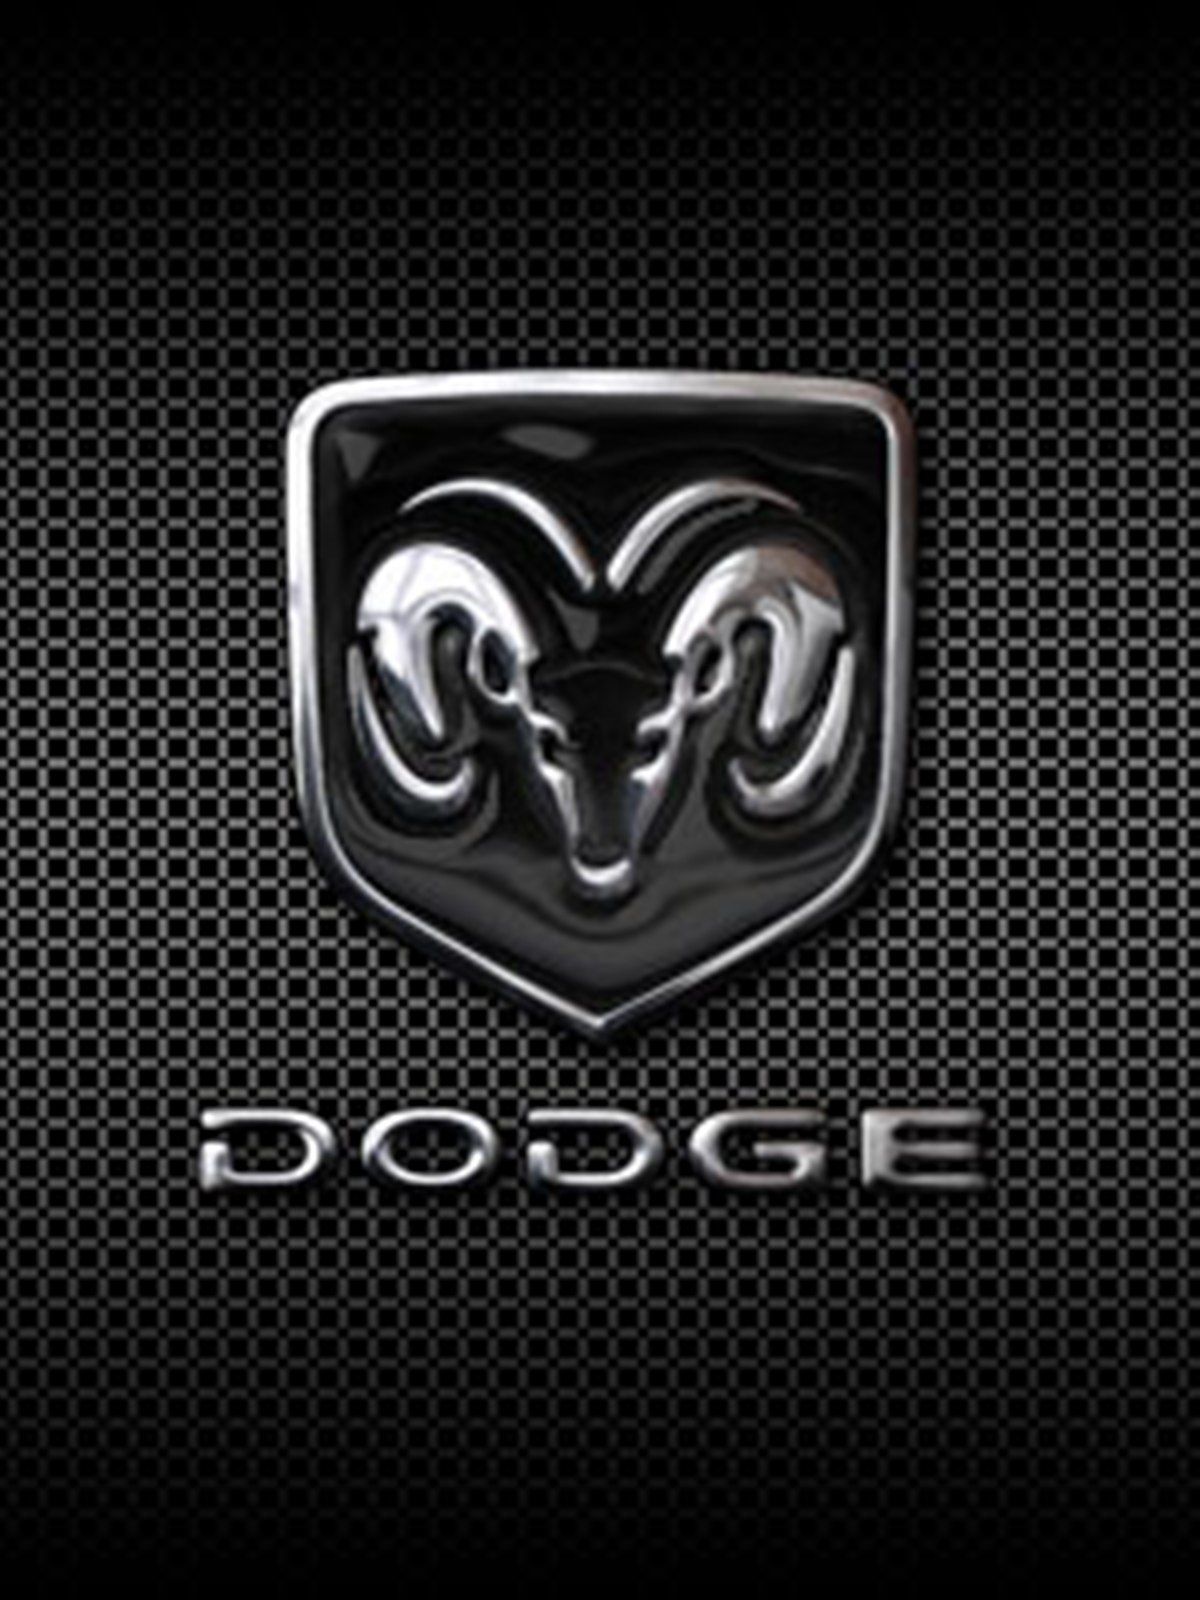 Dodge Logo Wallpapers HD  PixelsTalkNet